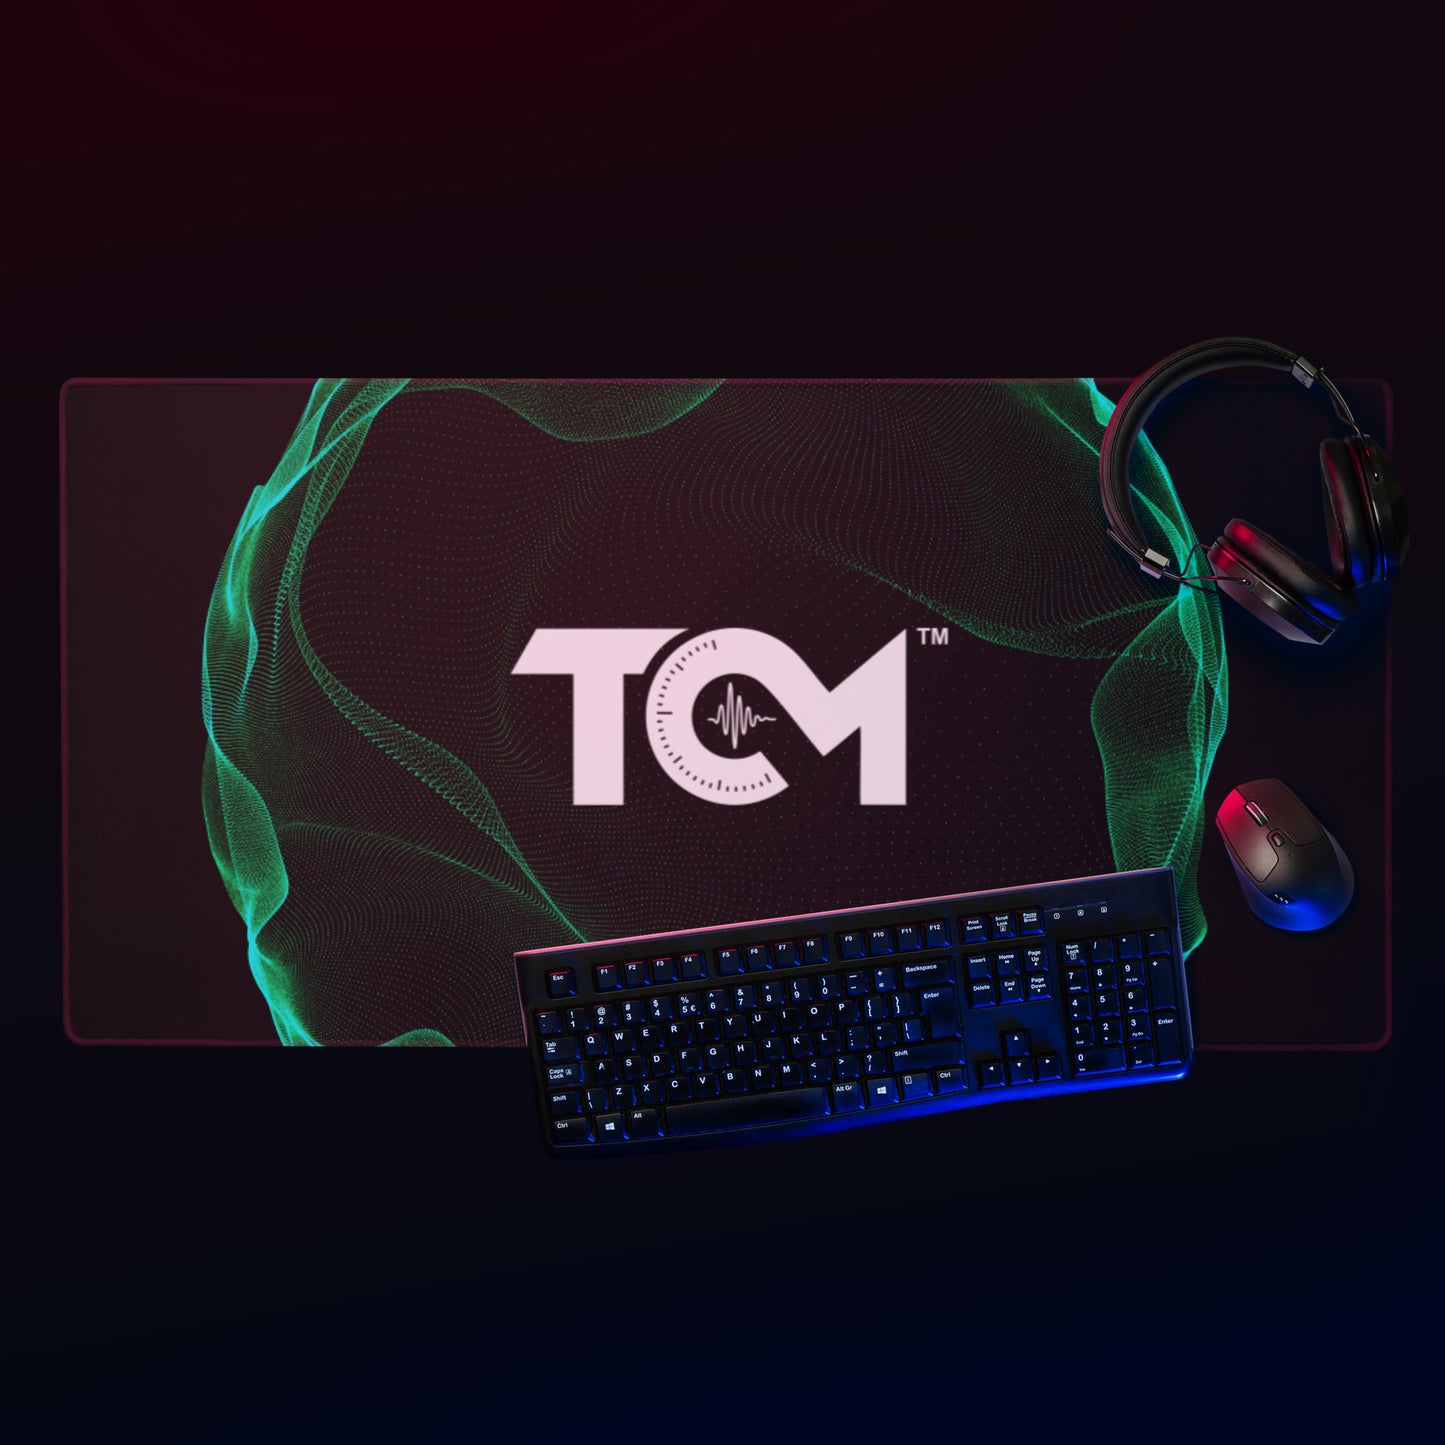 TCM gaming mouse pad